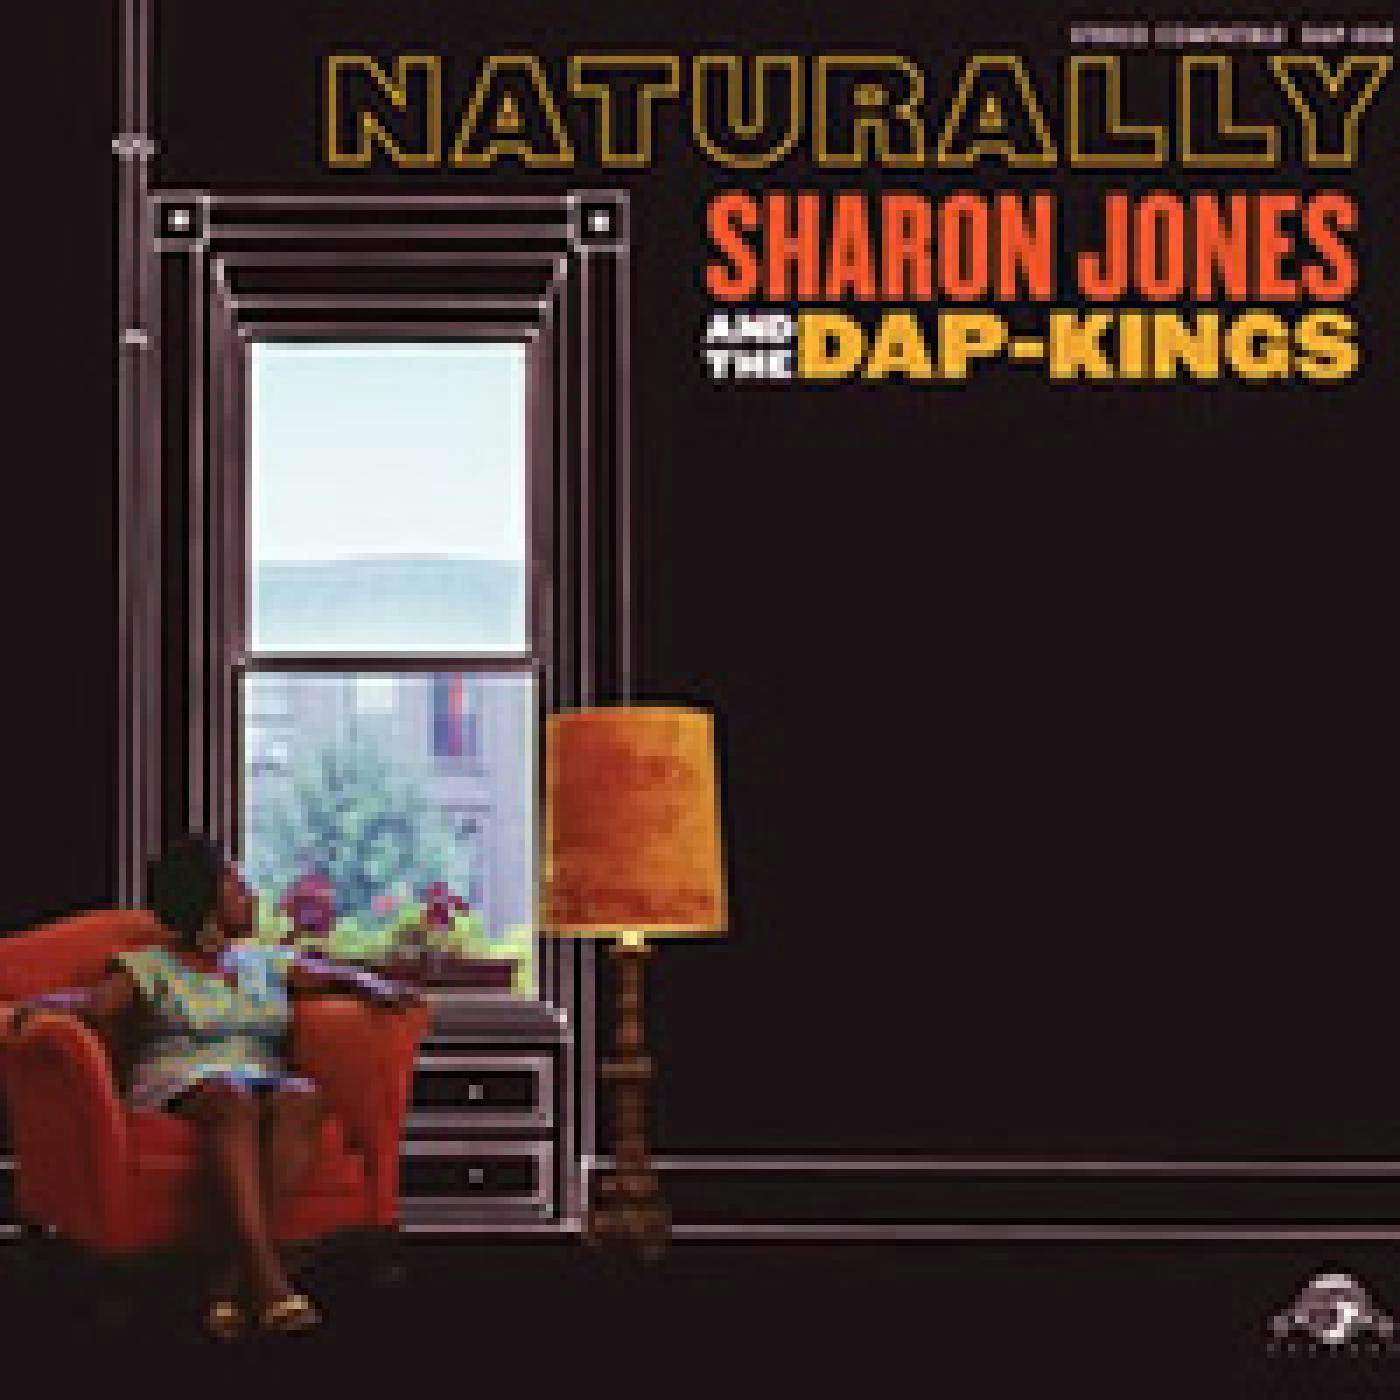 Sharon Jones & The Dap-Kings Naturally Vinyl Record